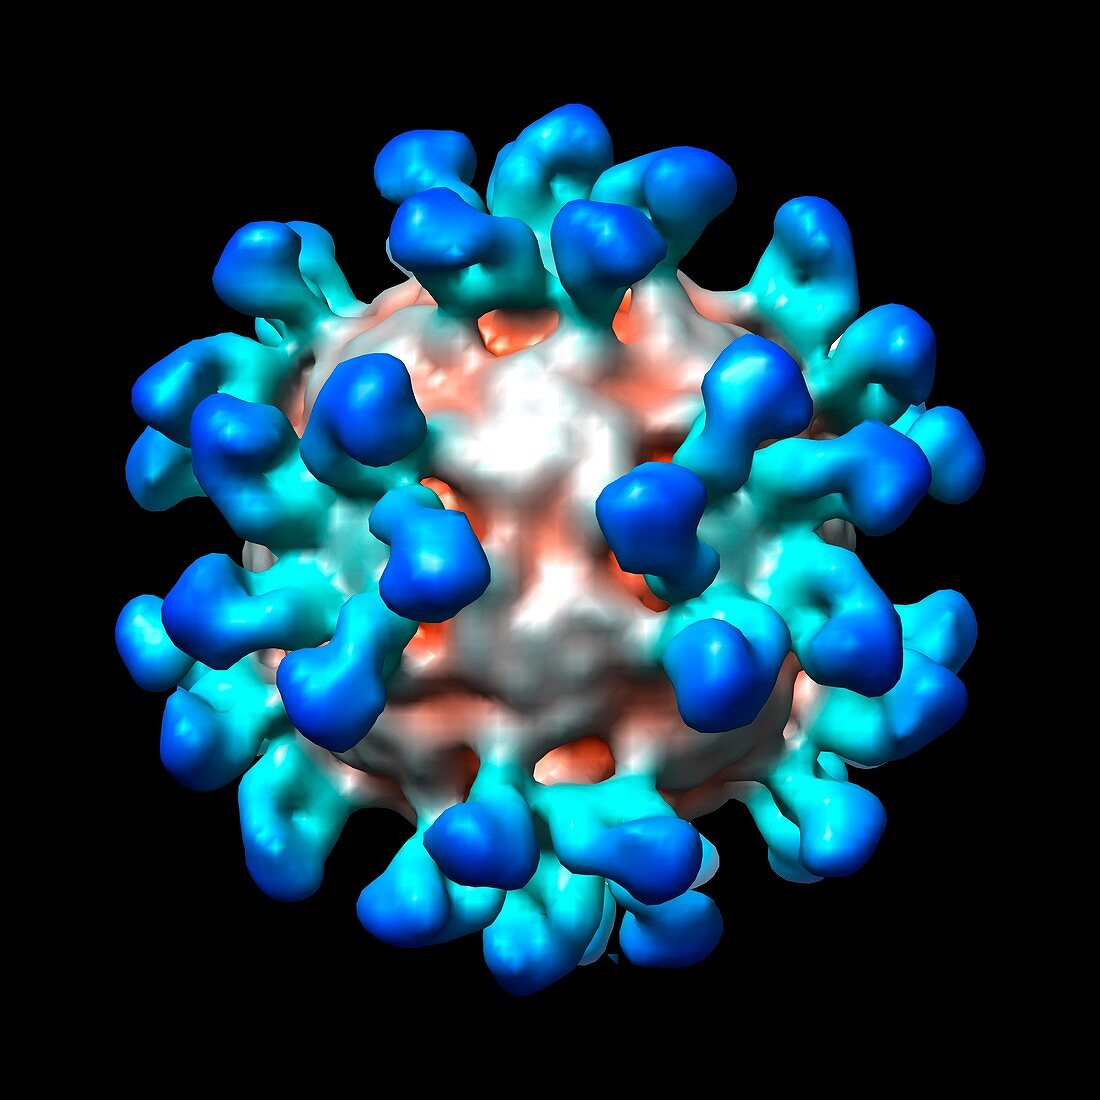 Human rhinovirus with antibodies